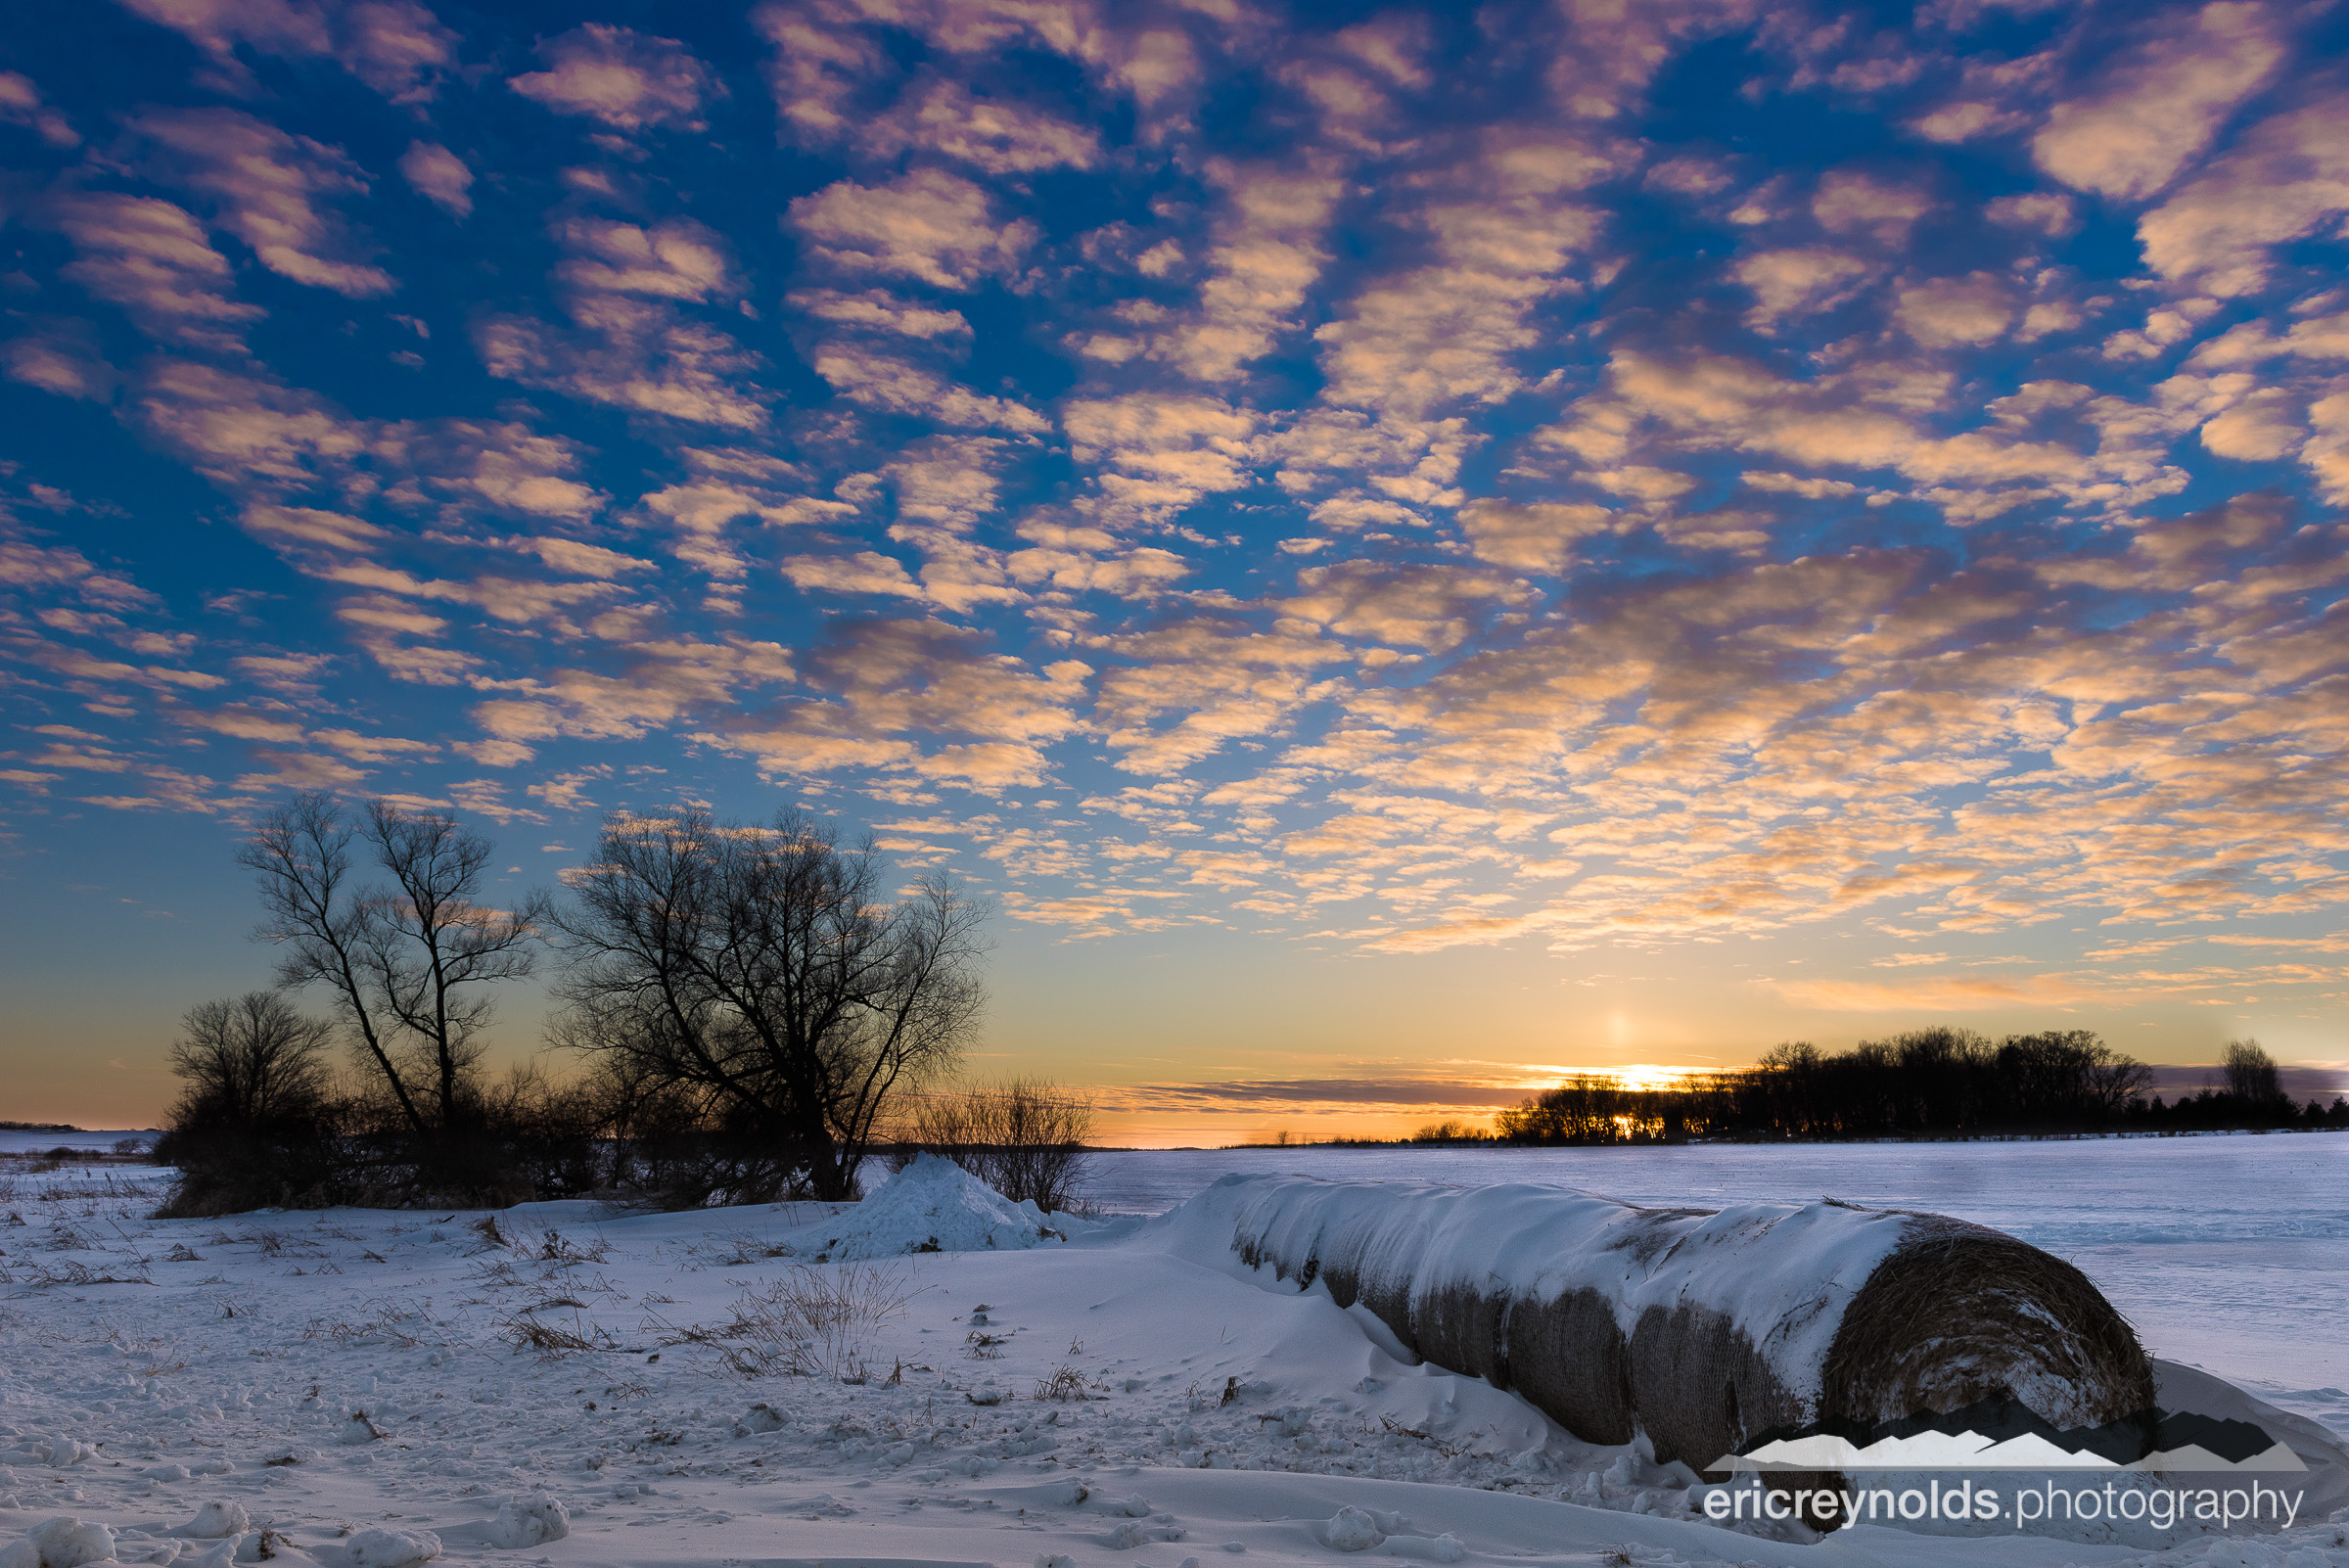 Sunset over Snowy Fields by Eric Reynolds - Landscape Photographer